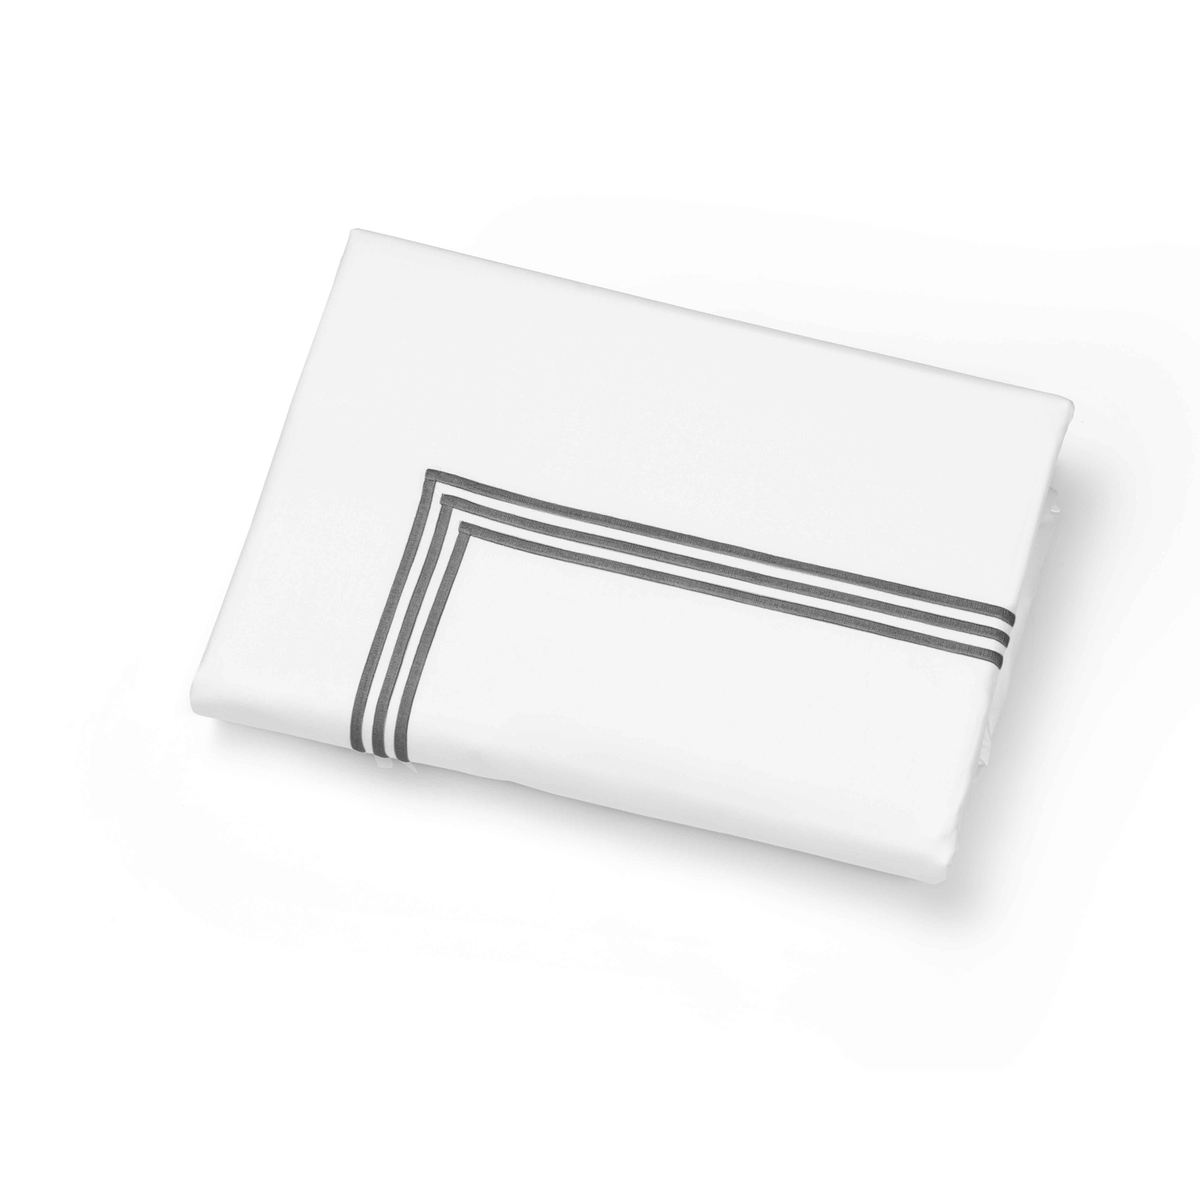 Folded Duvet Cover of Signoria Platinum Percale Bedding in White/Lead Grey Color